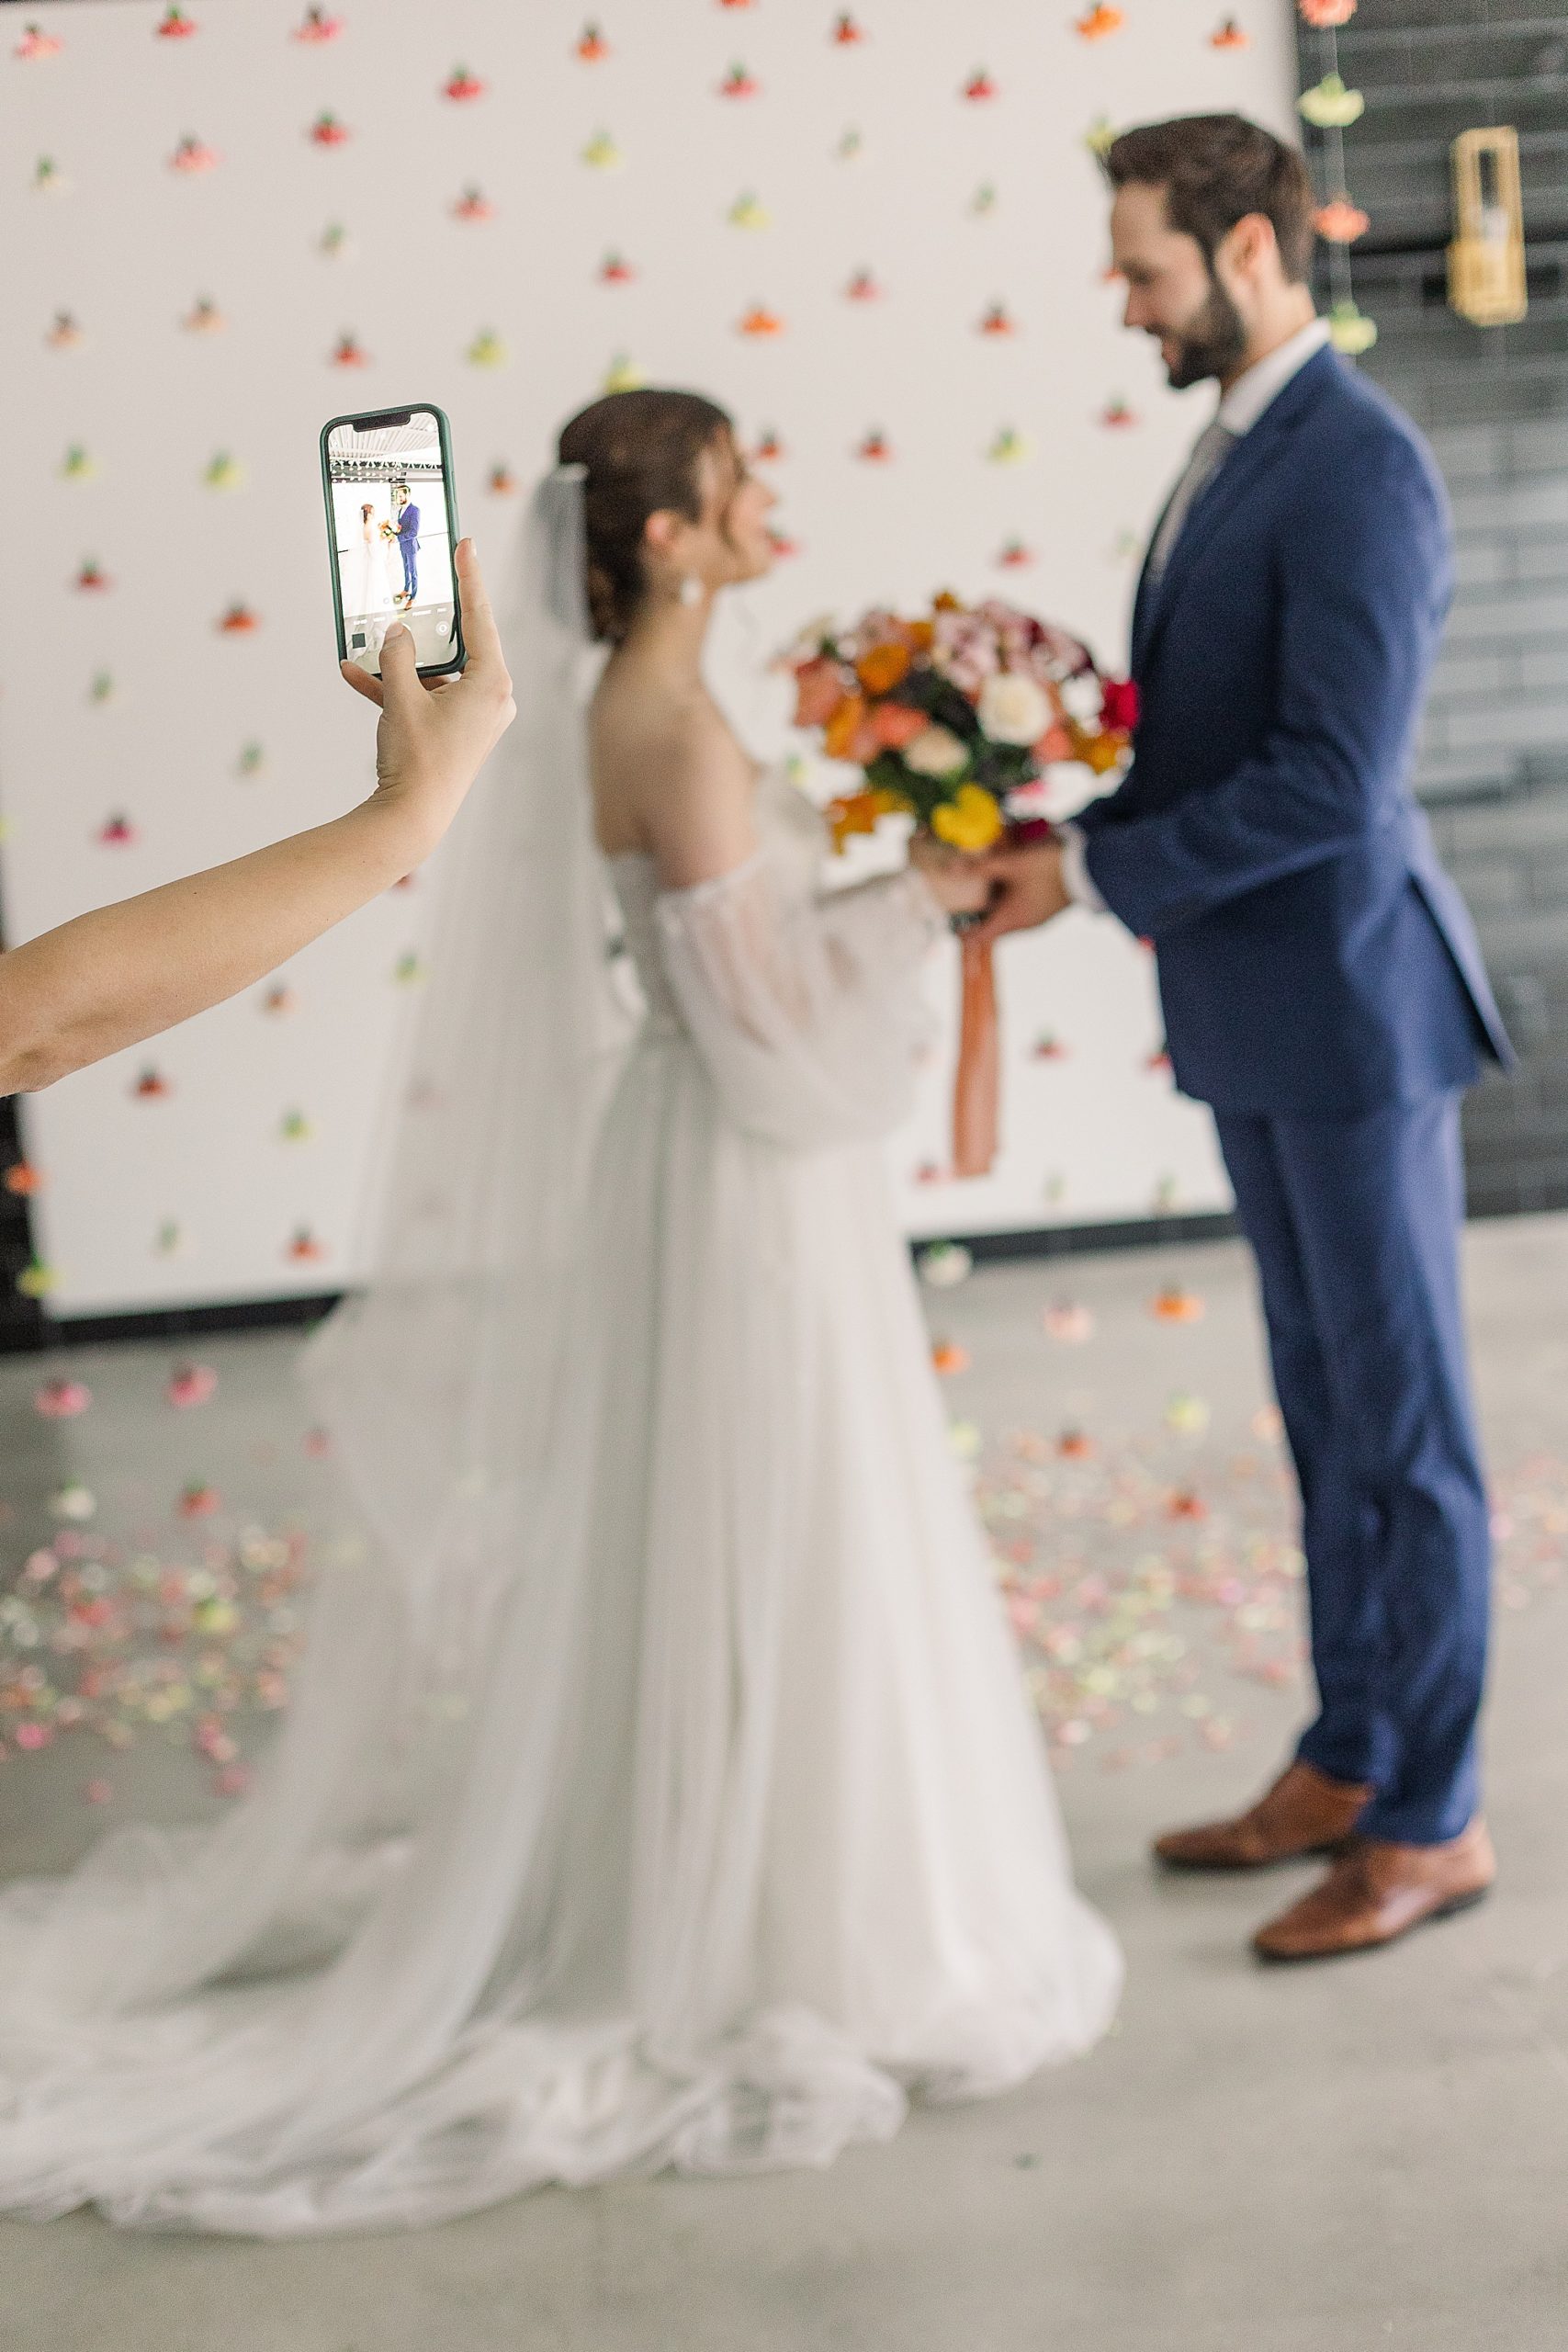 3 benefits of an unplugged ceremony | Kansas City wedding photographer | Kelsey Alumbaugh Photography | #missouriweddingphotographer #missouriwedding #kcweddingphotographer #kansascitywedding #unpluggedceremony